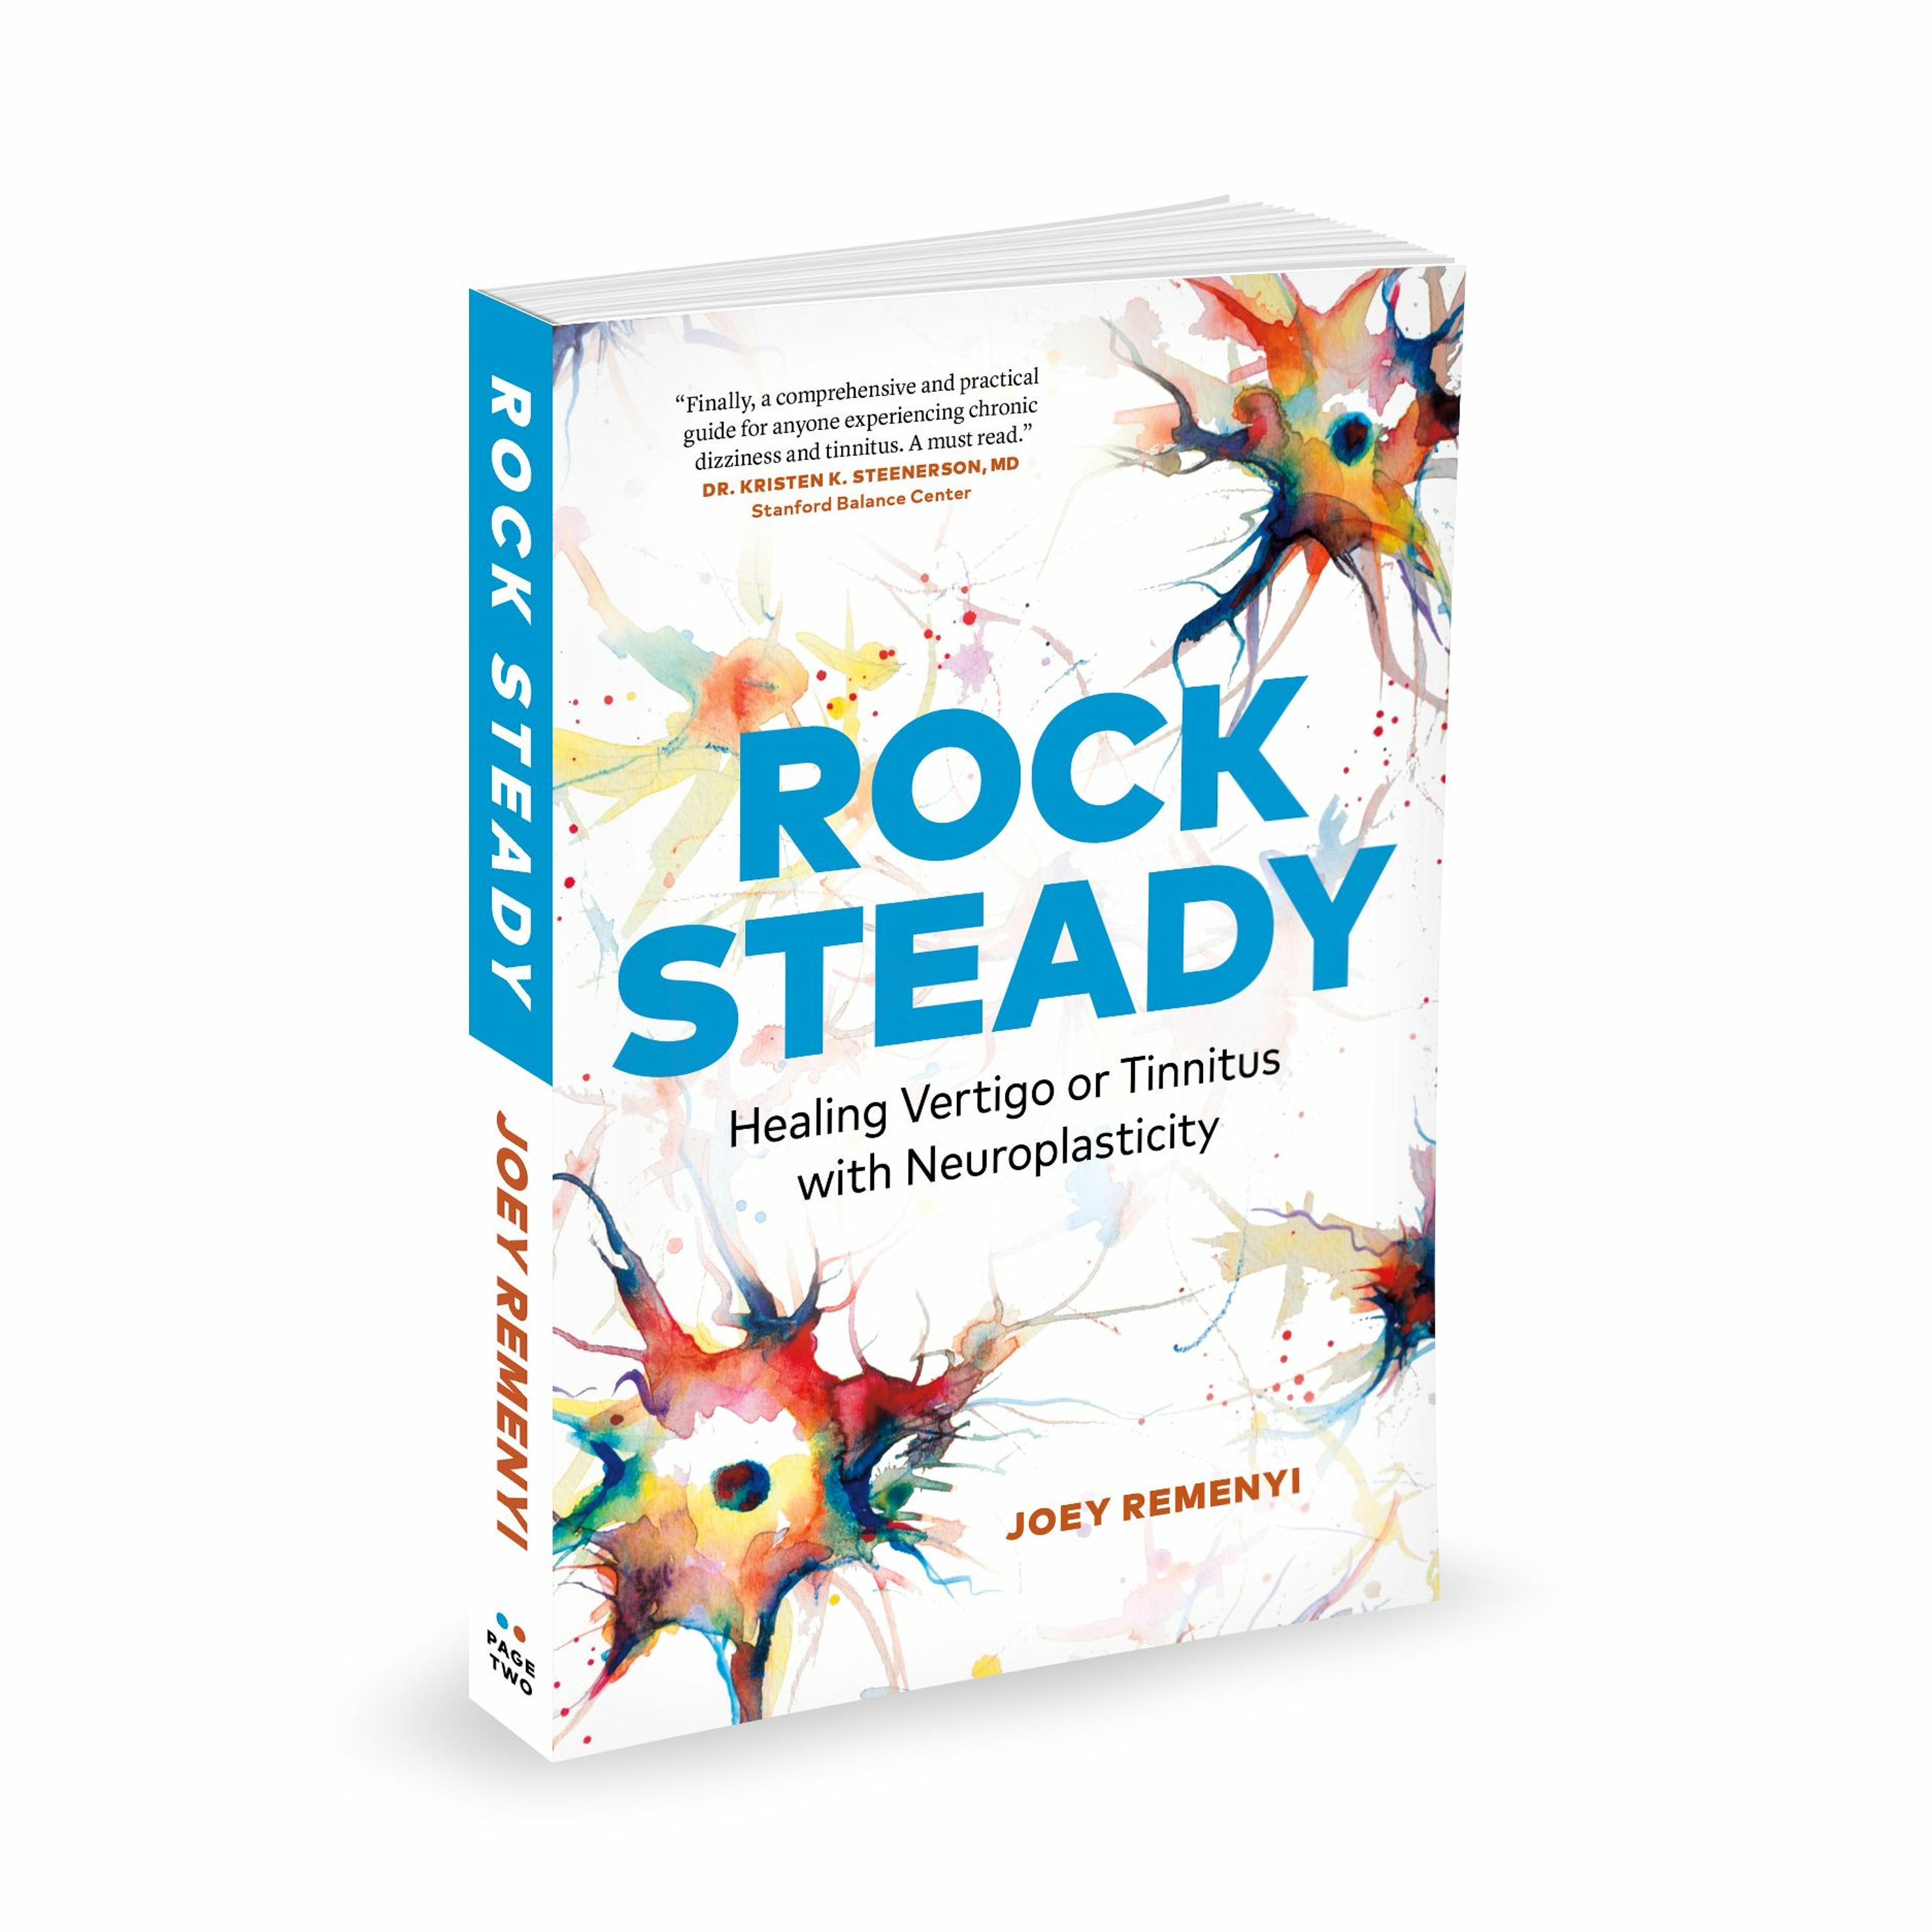 Rock Steady Book Launch!